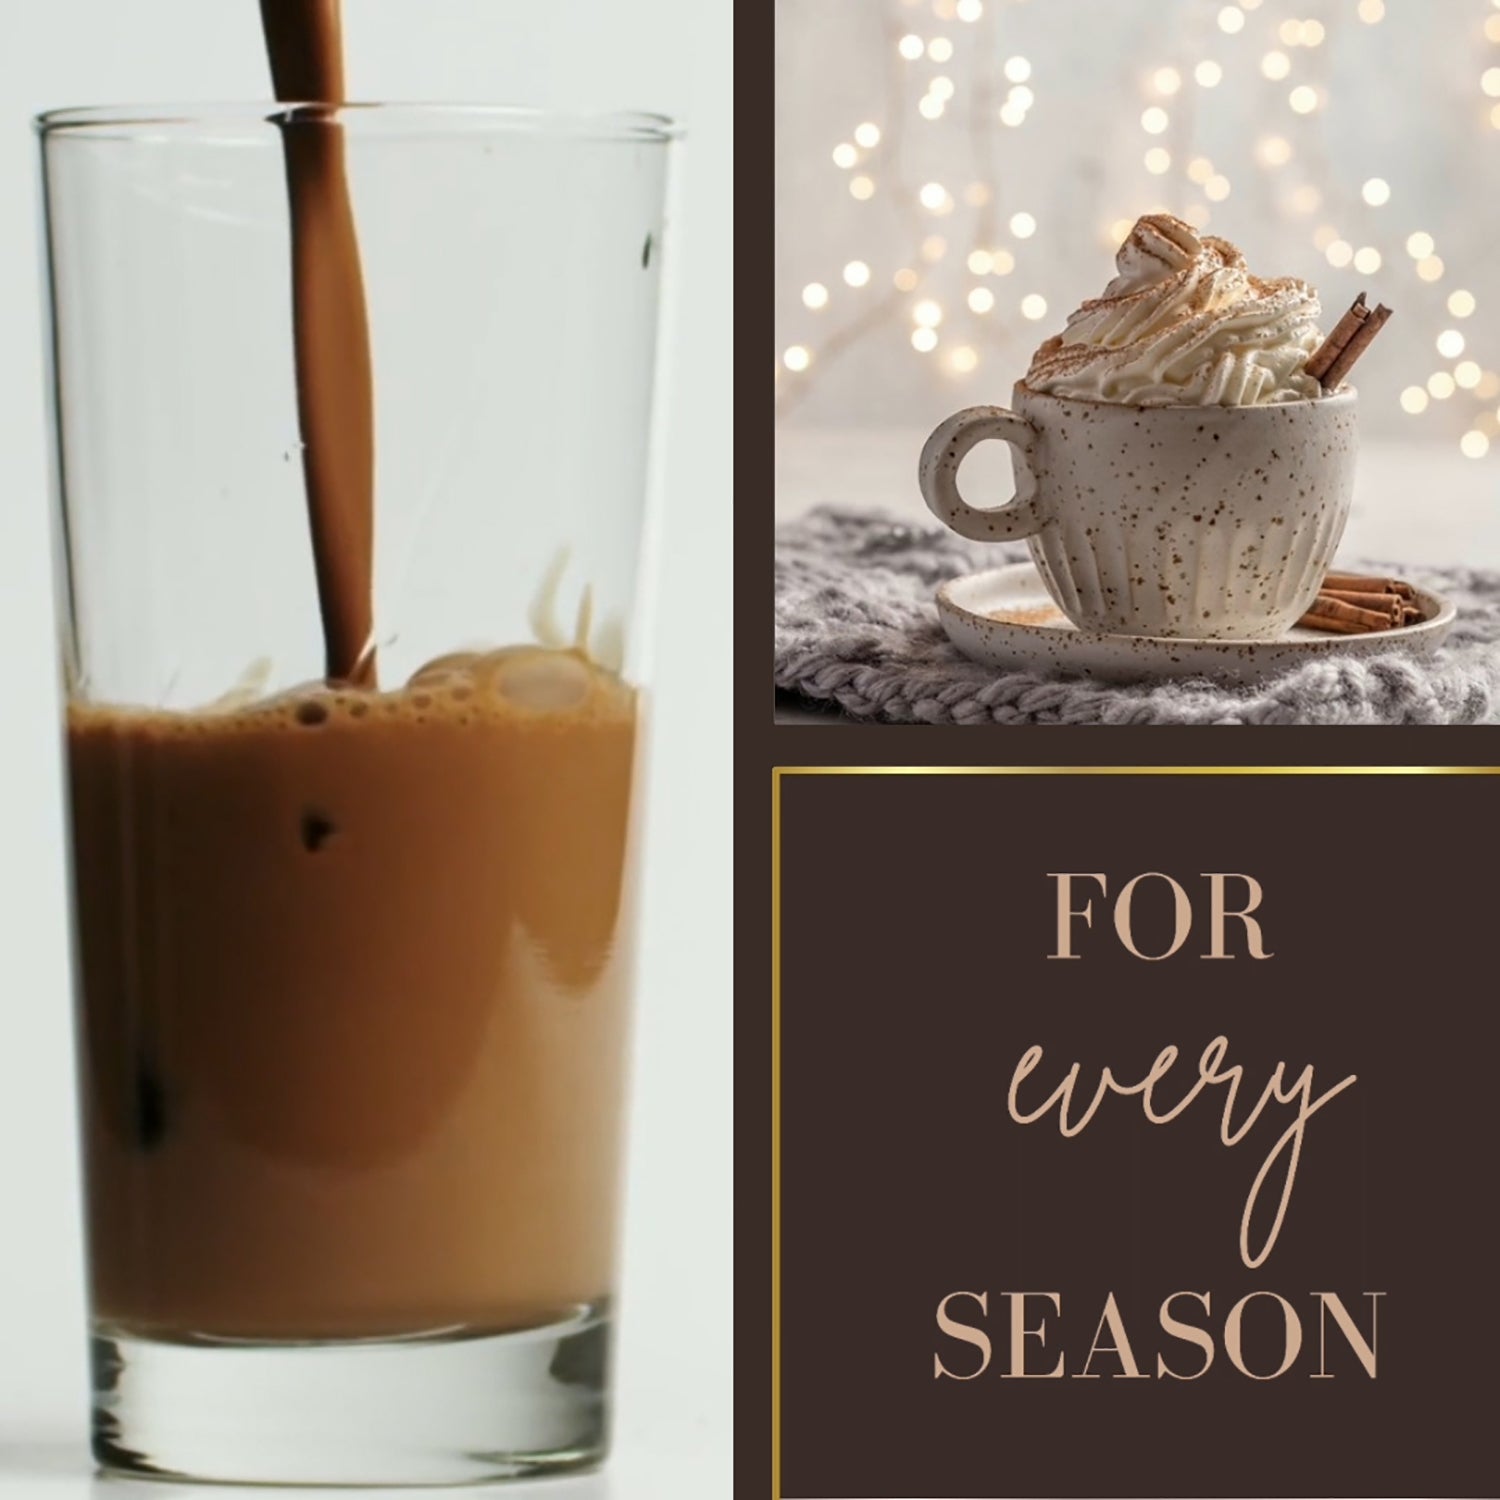 Cocosutra Swiss Vanilla Hot Chocolate Travel Friendly Hamper - All Season Drink